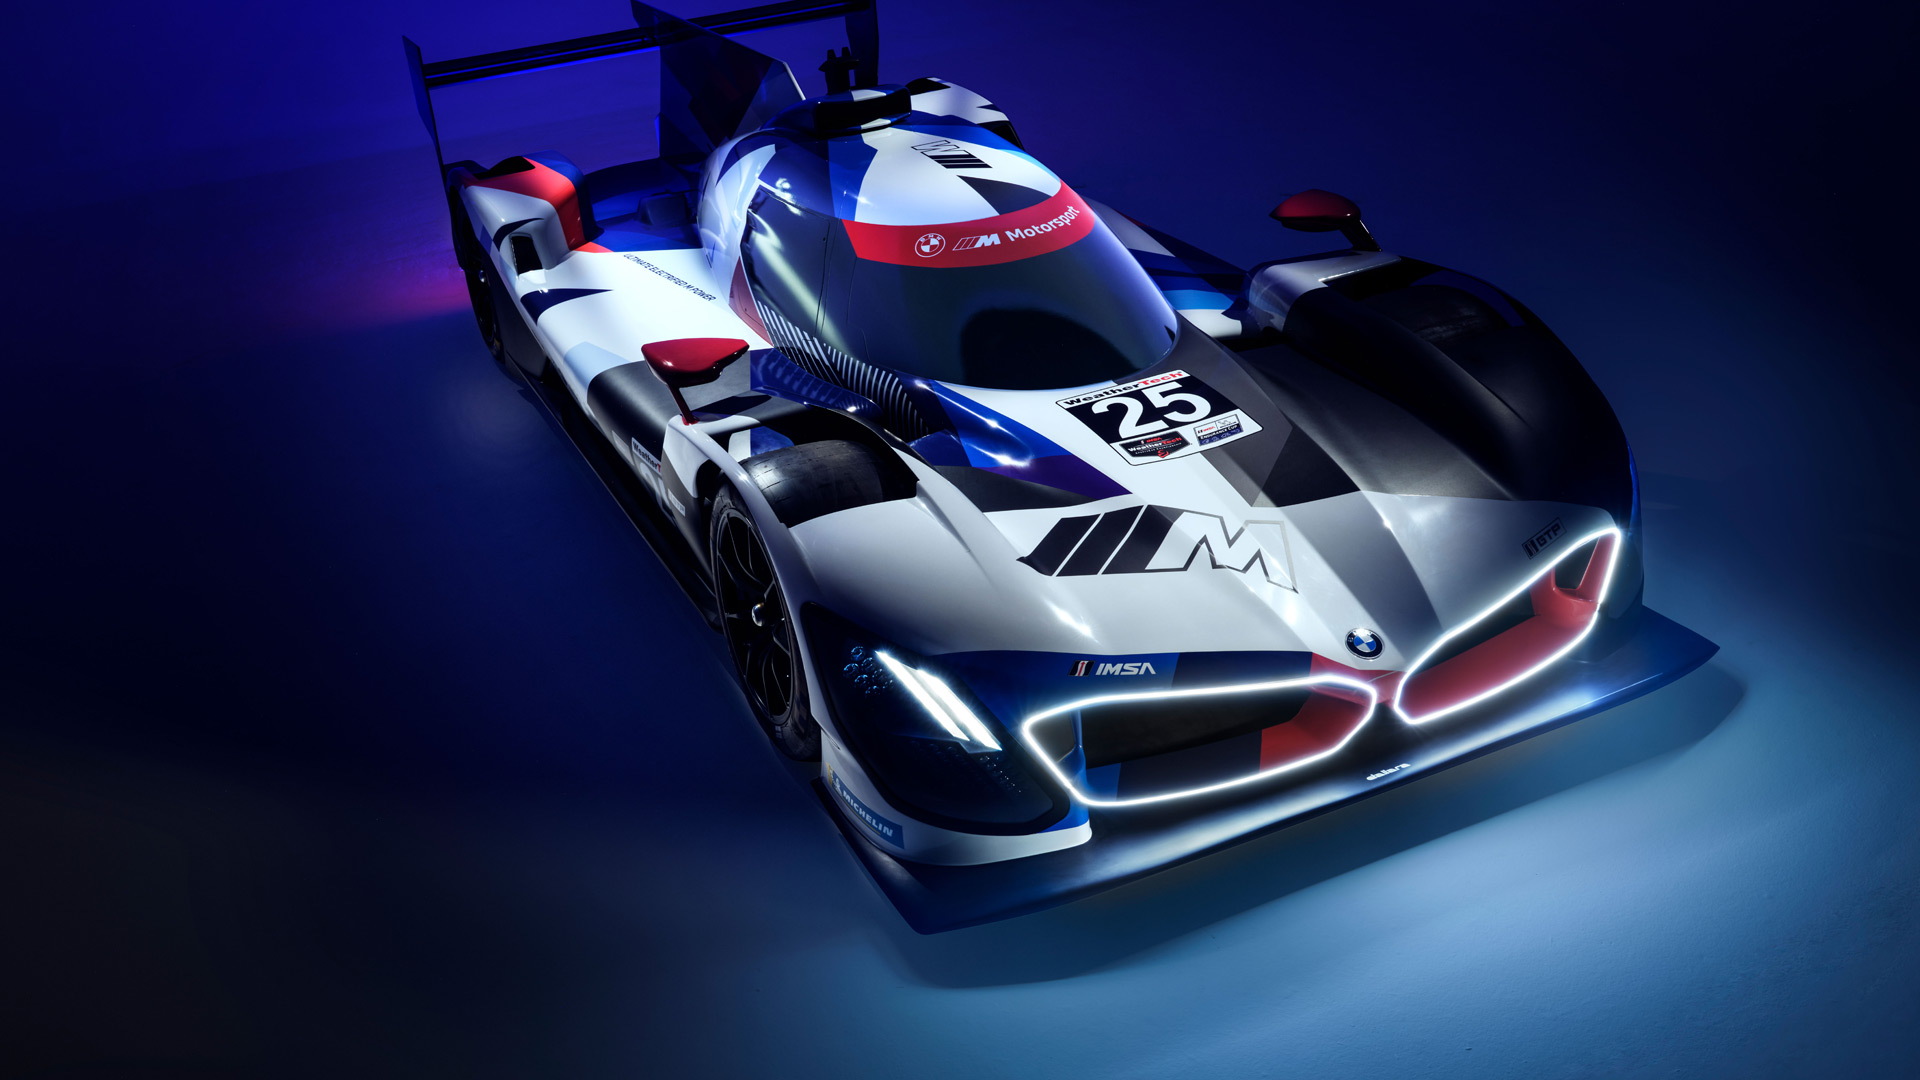 2023 BMW M Hybrid V8 LMDh race car